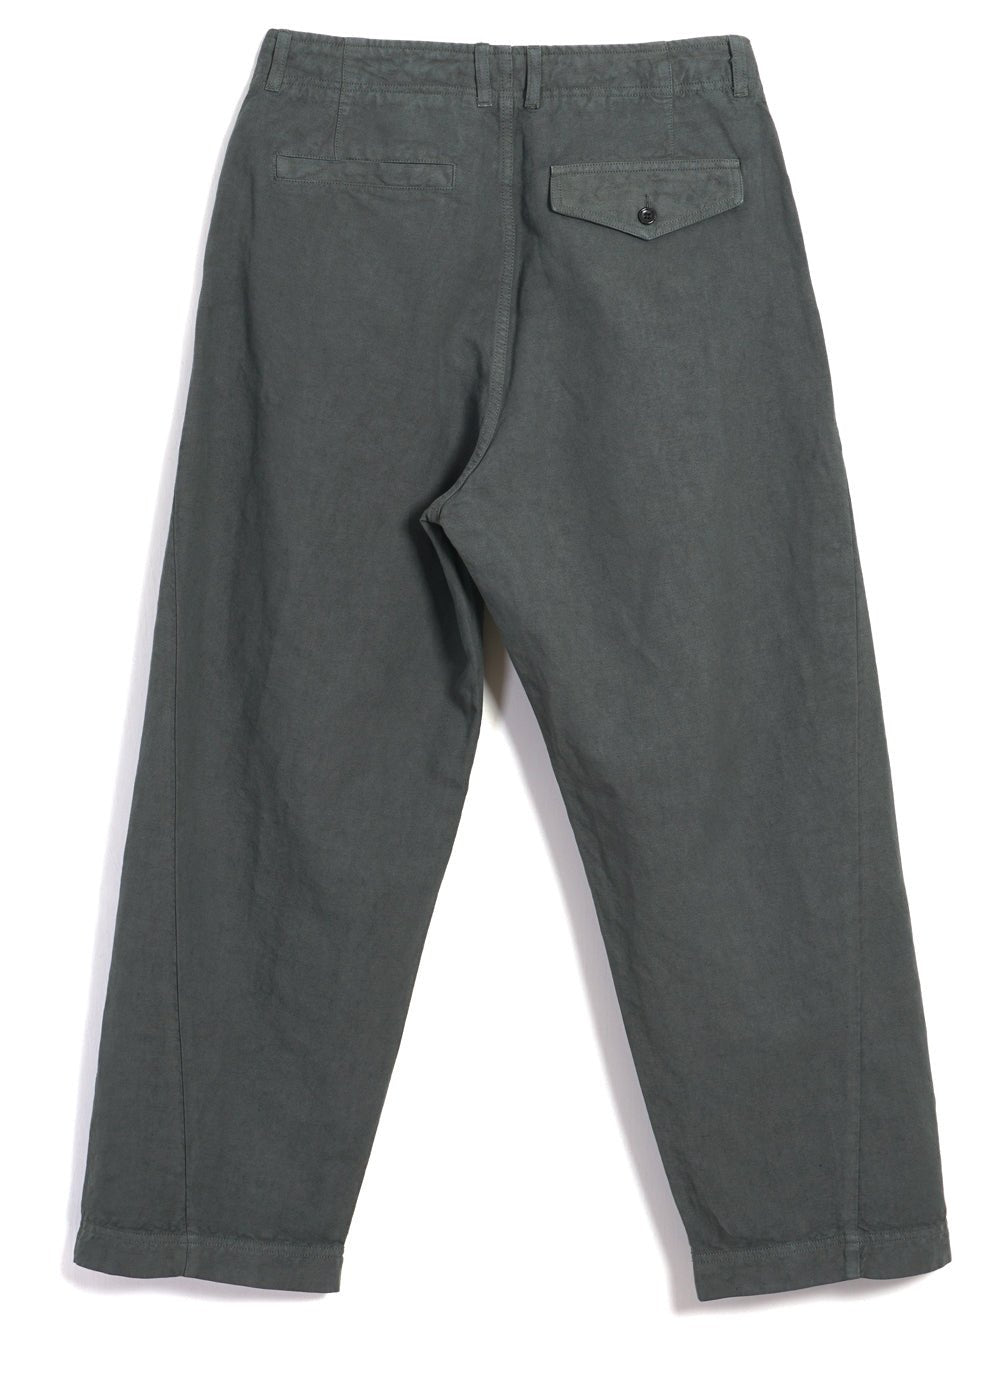 HANSEN GARMENTS - BOBBY | Super Wide Pleated Shorts | Oxidized - HANSEN Garments